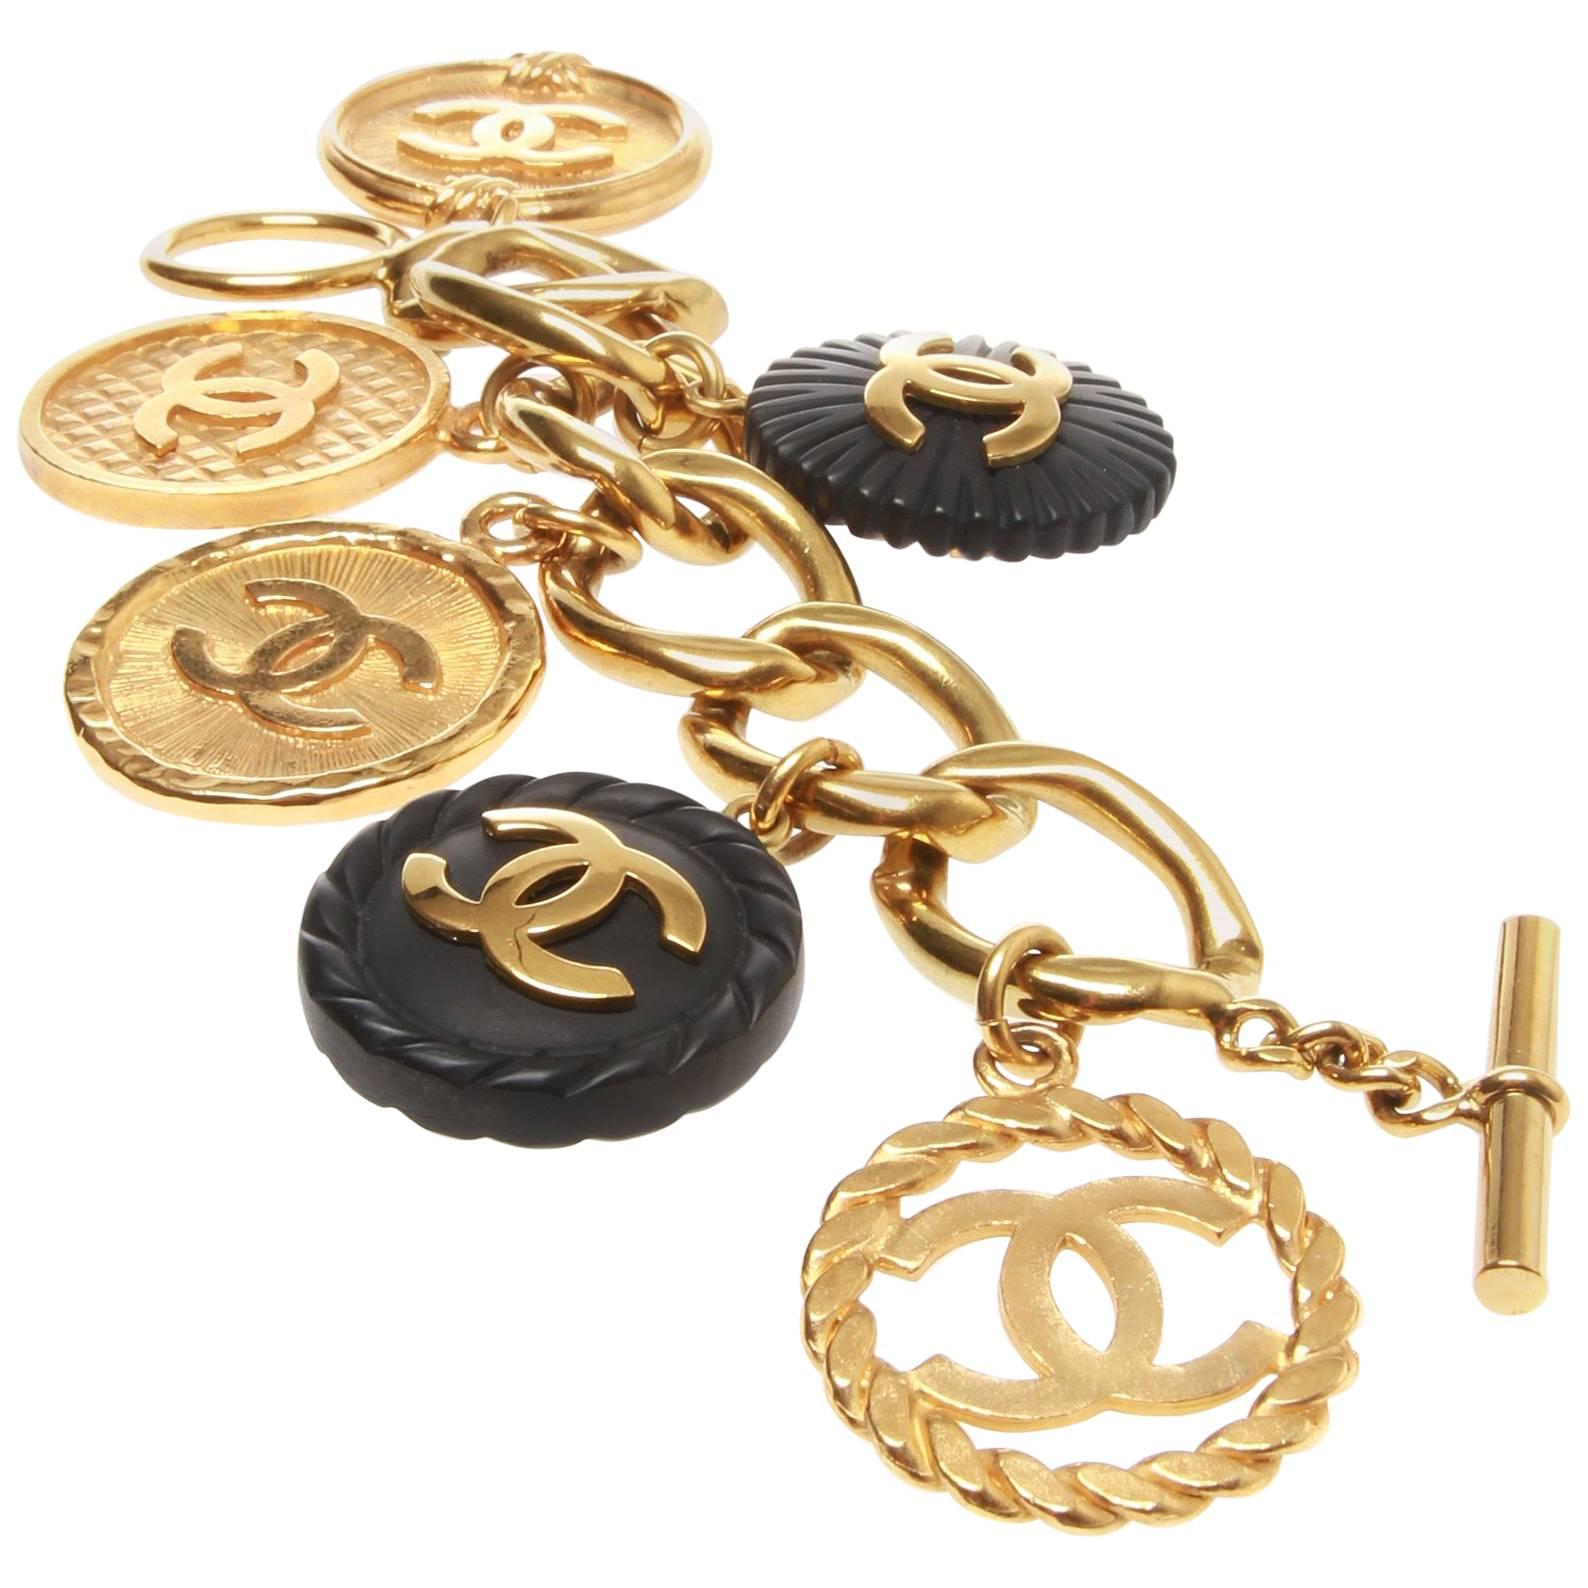 Chanel Large Charmed Bracelet, Large Link 1994 Model, w/ Black and Gold CC Charm